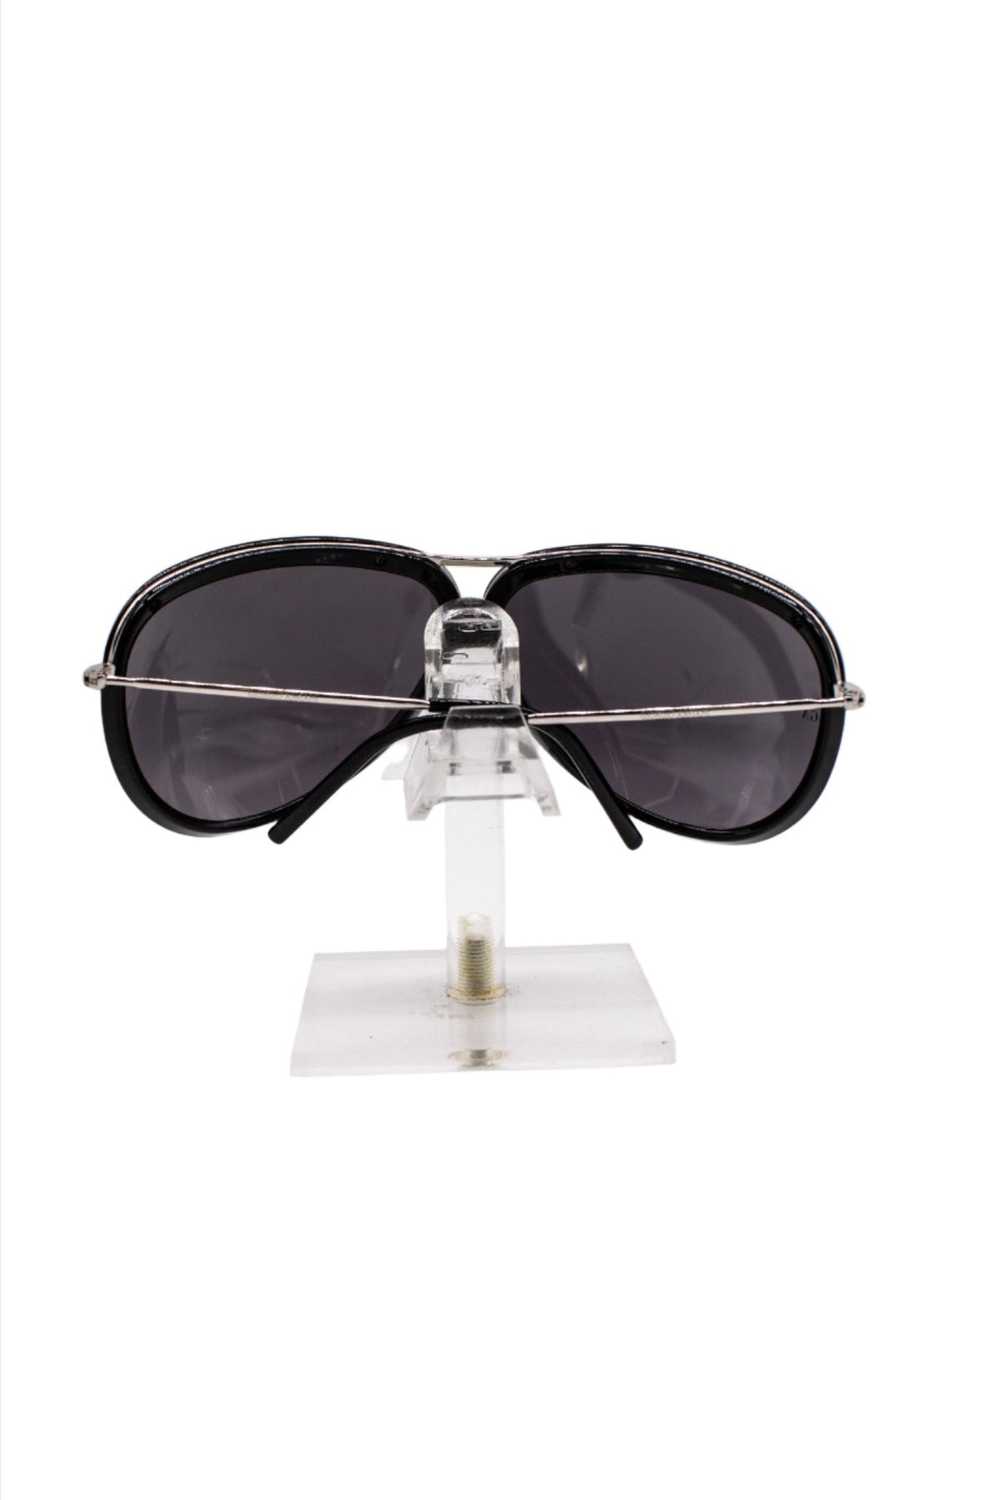 Versace Aviator Mens Sunglasses - image 2